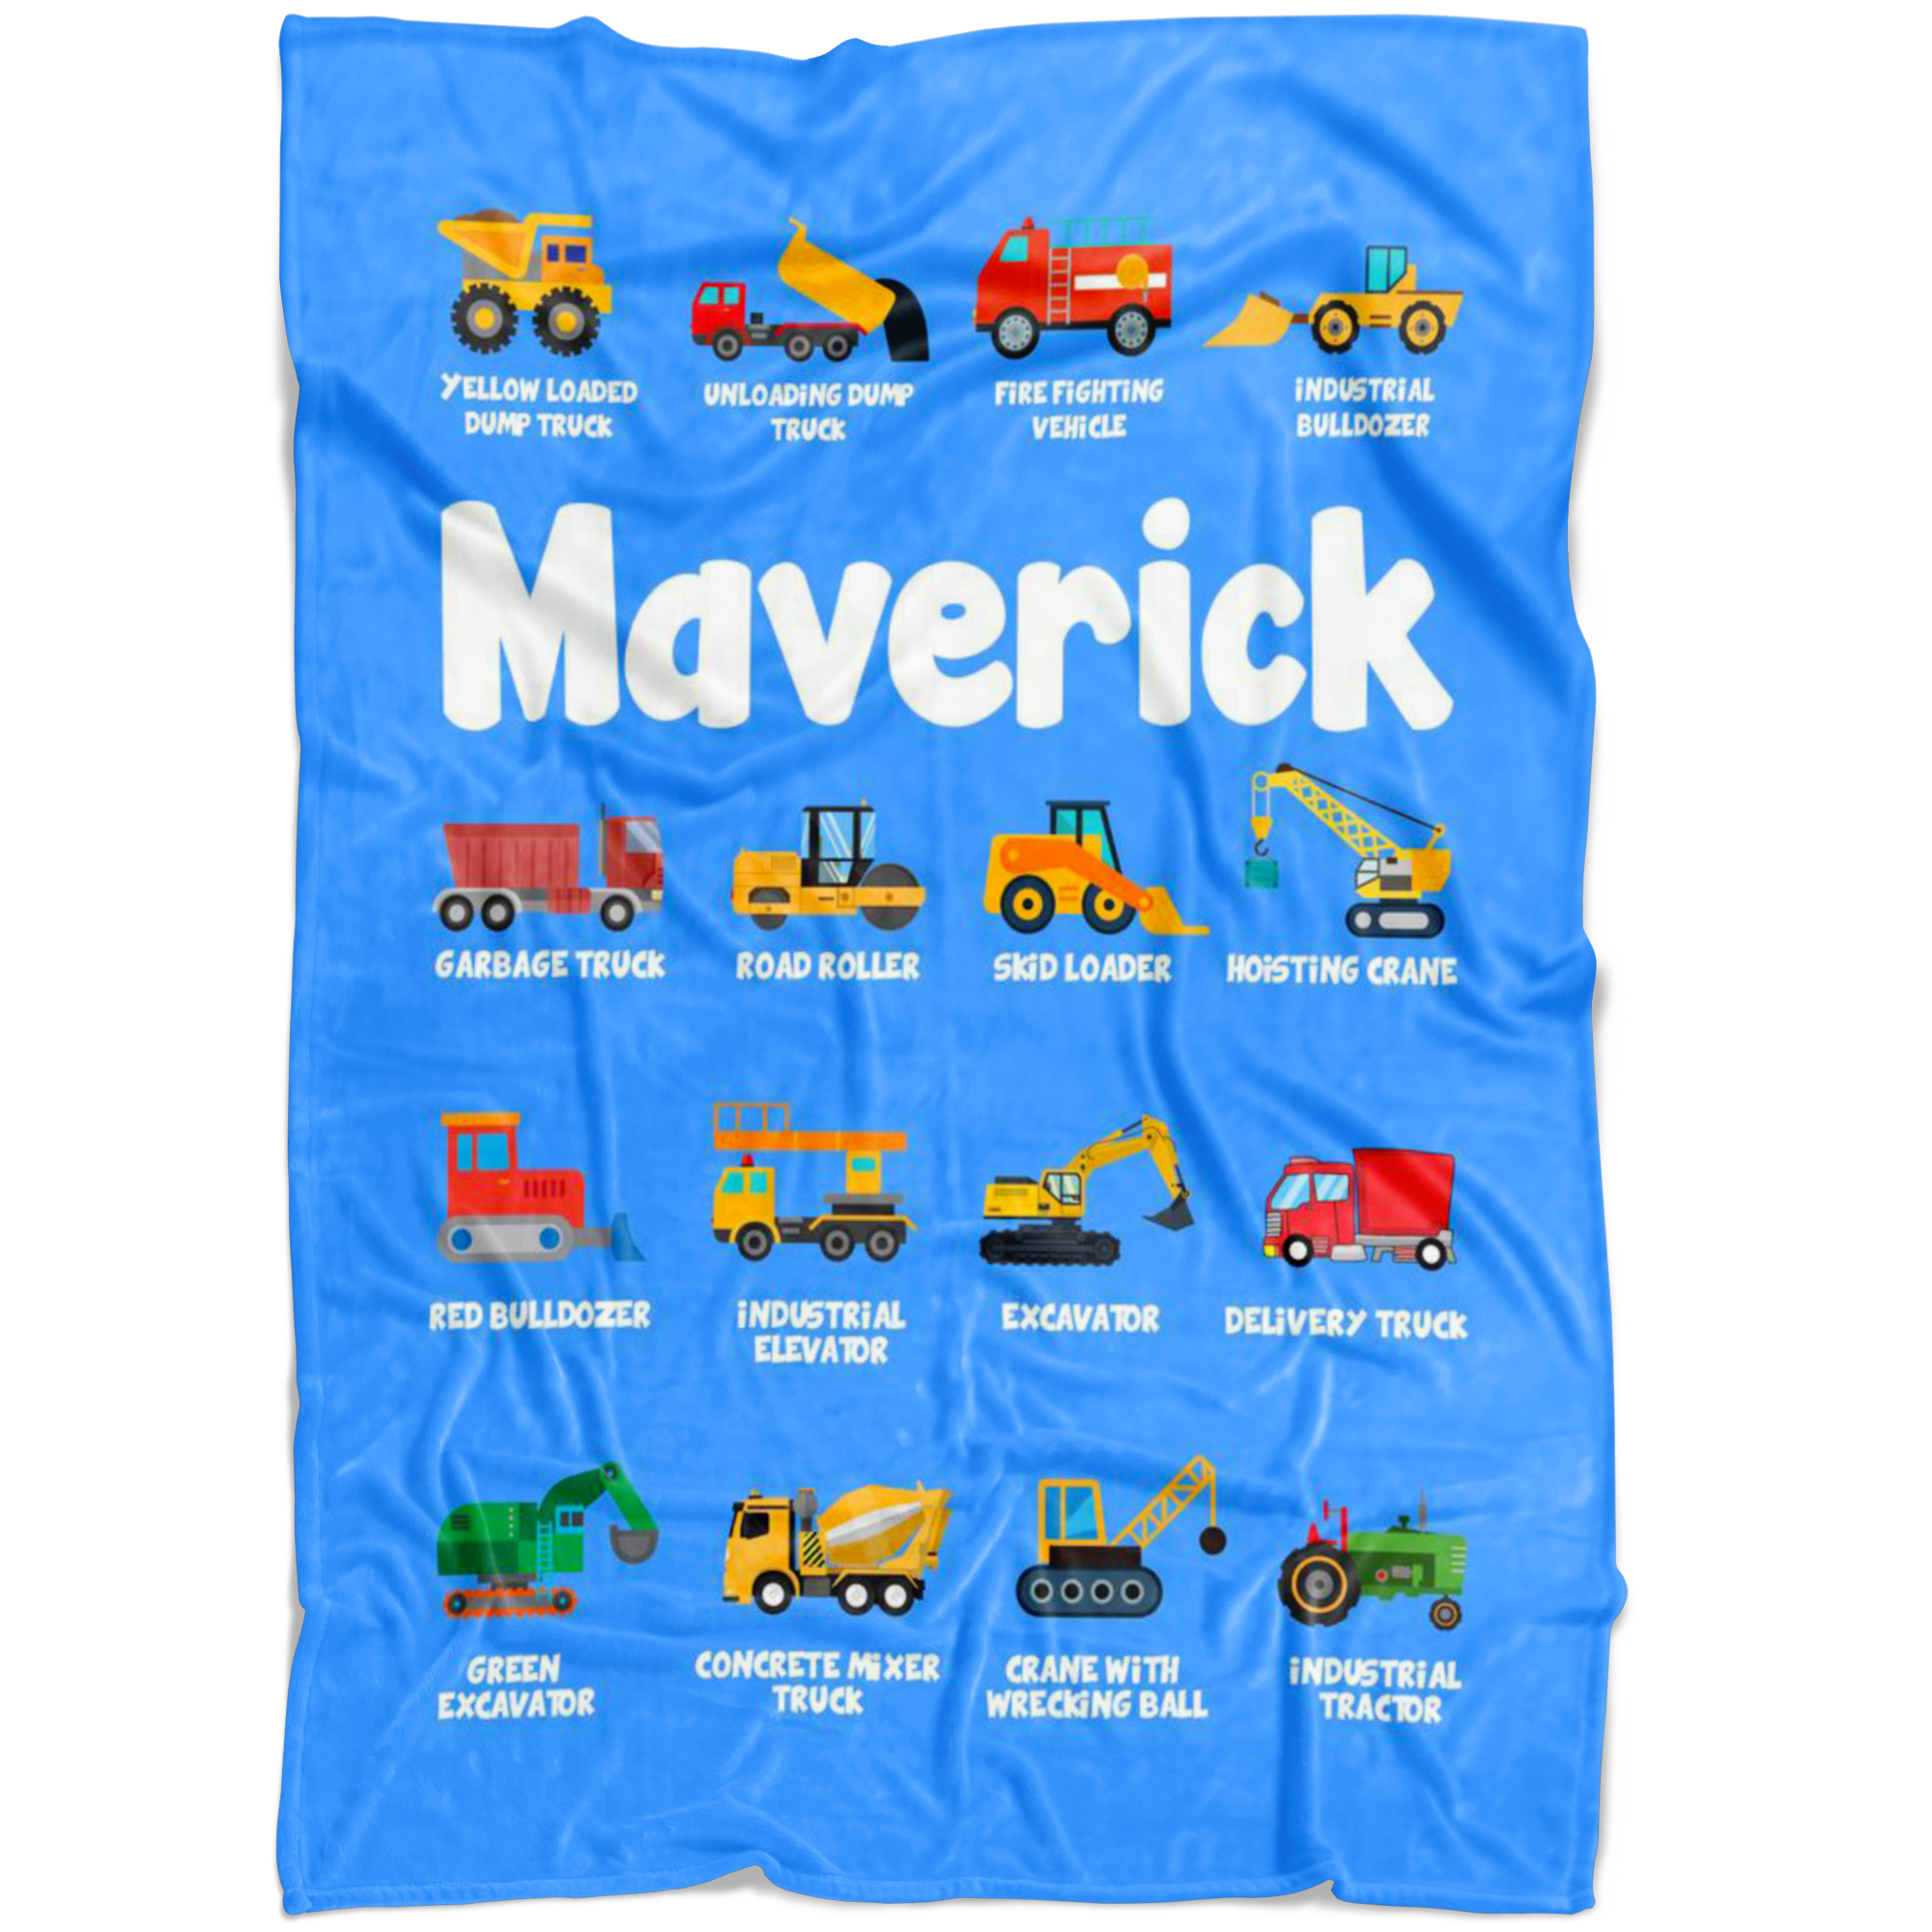 Maverick Construction Blanket Blue